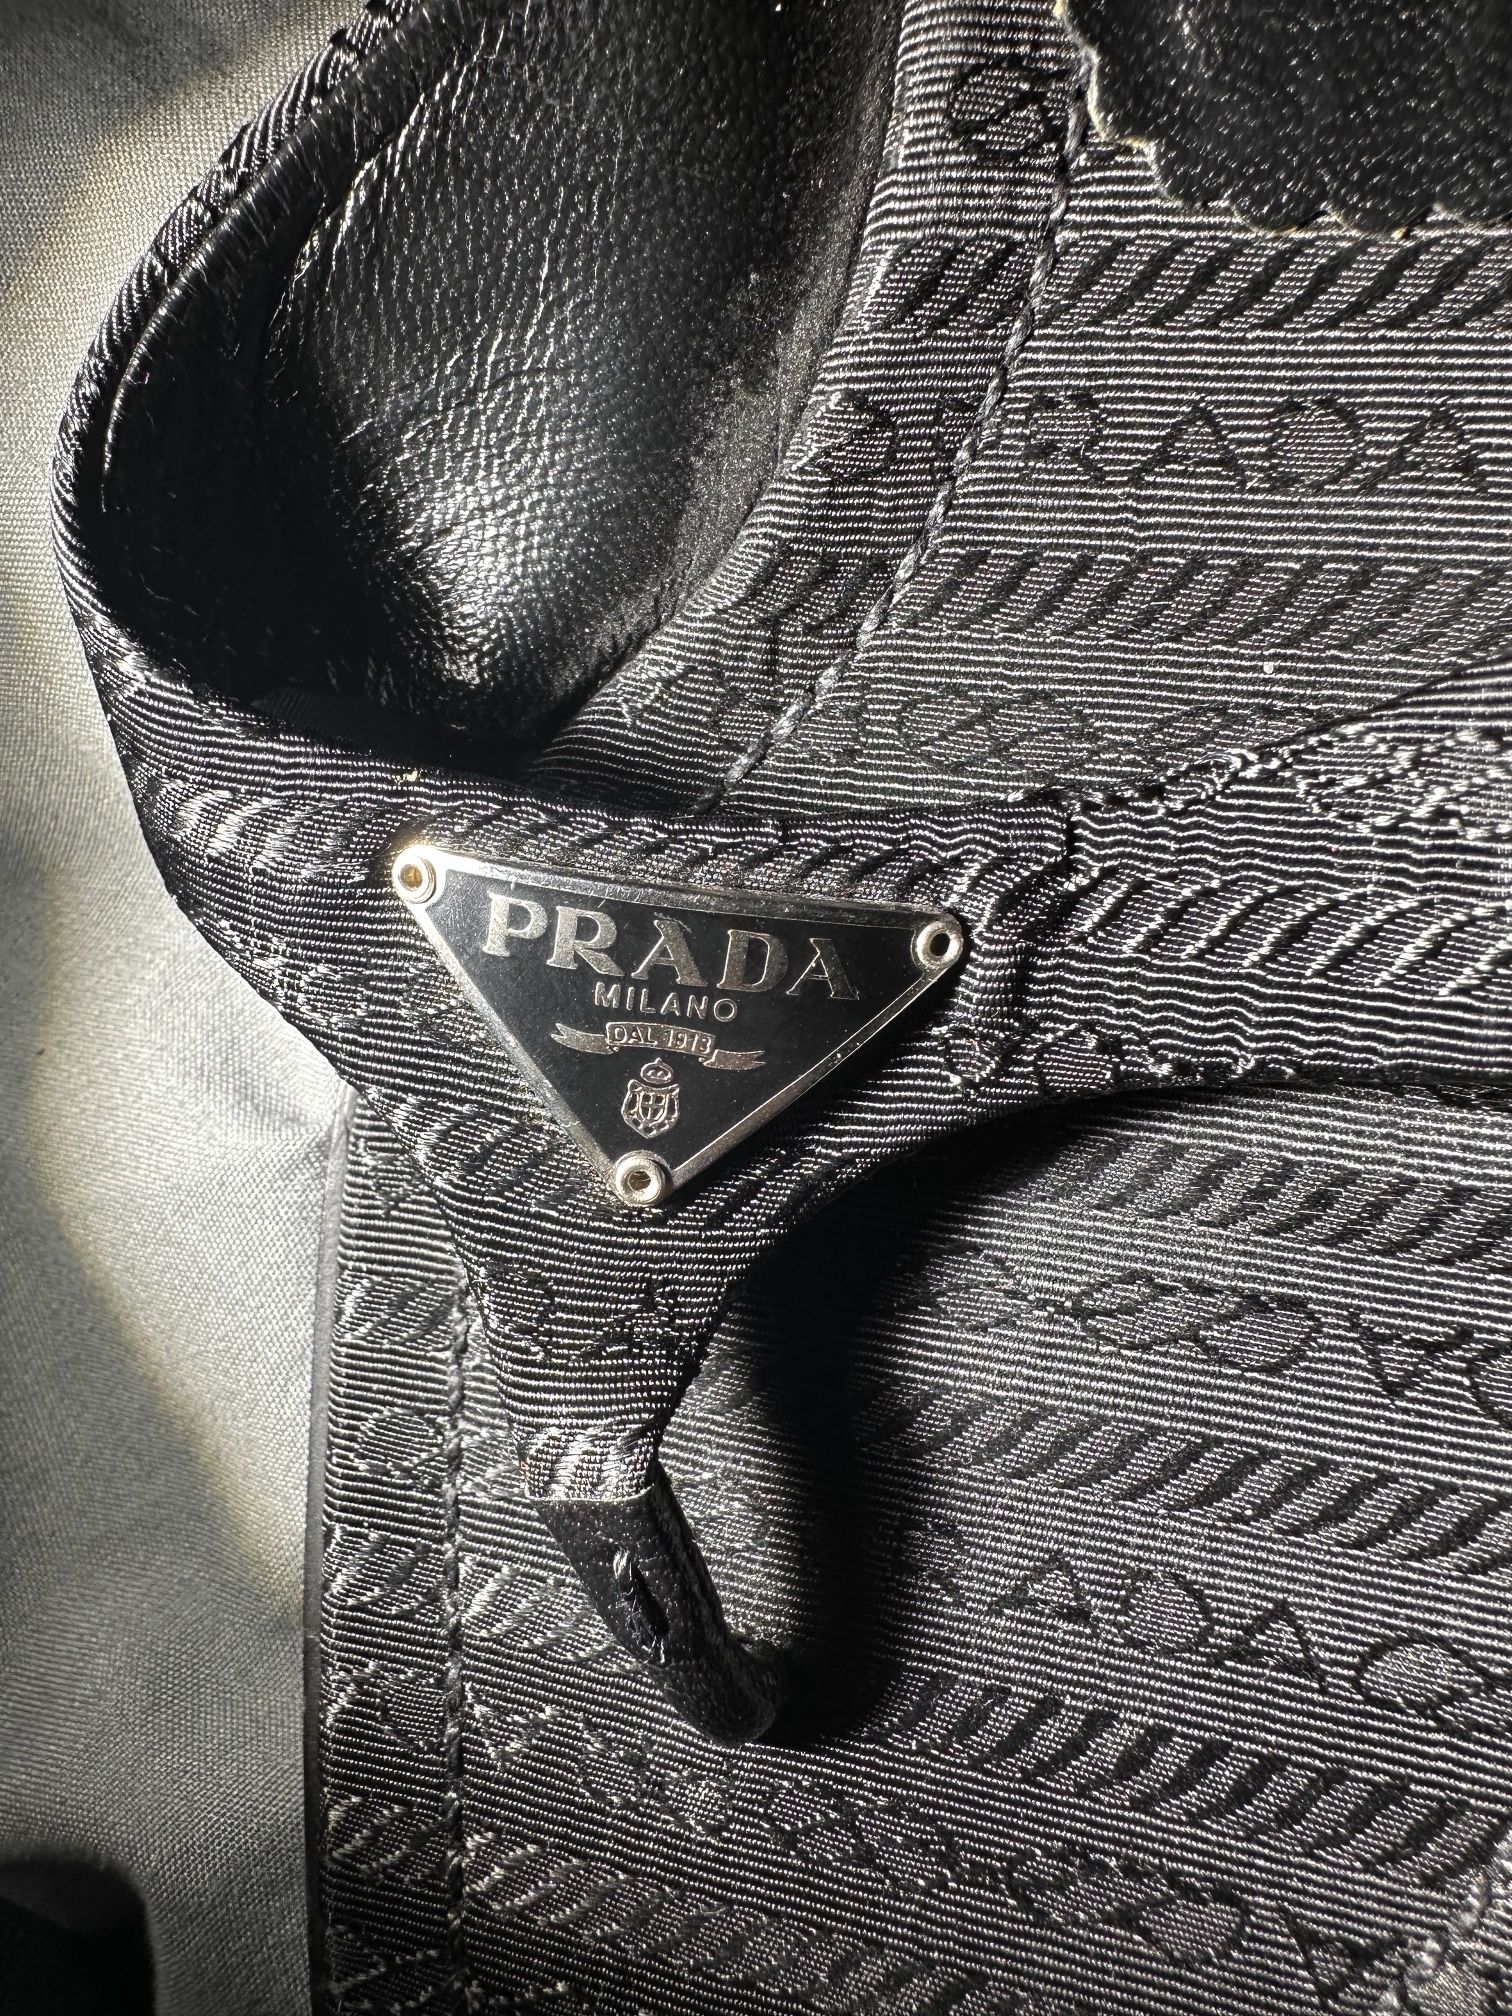 Prada Sandals- Black leather - Size 7 1/2 Women